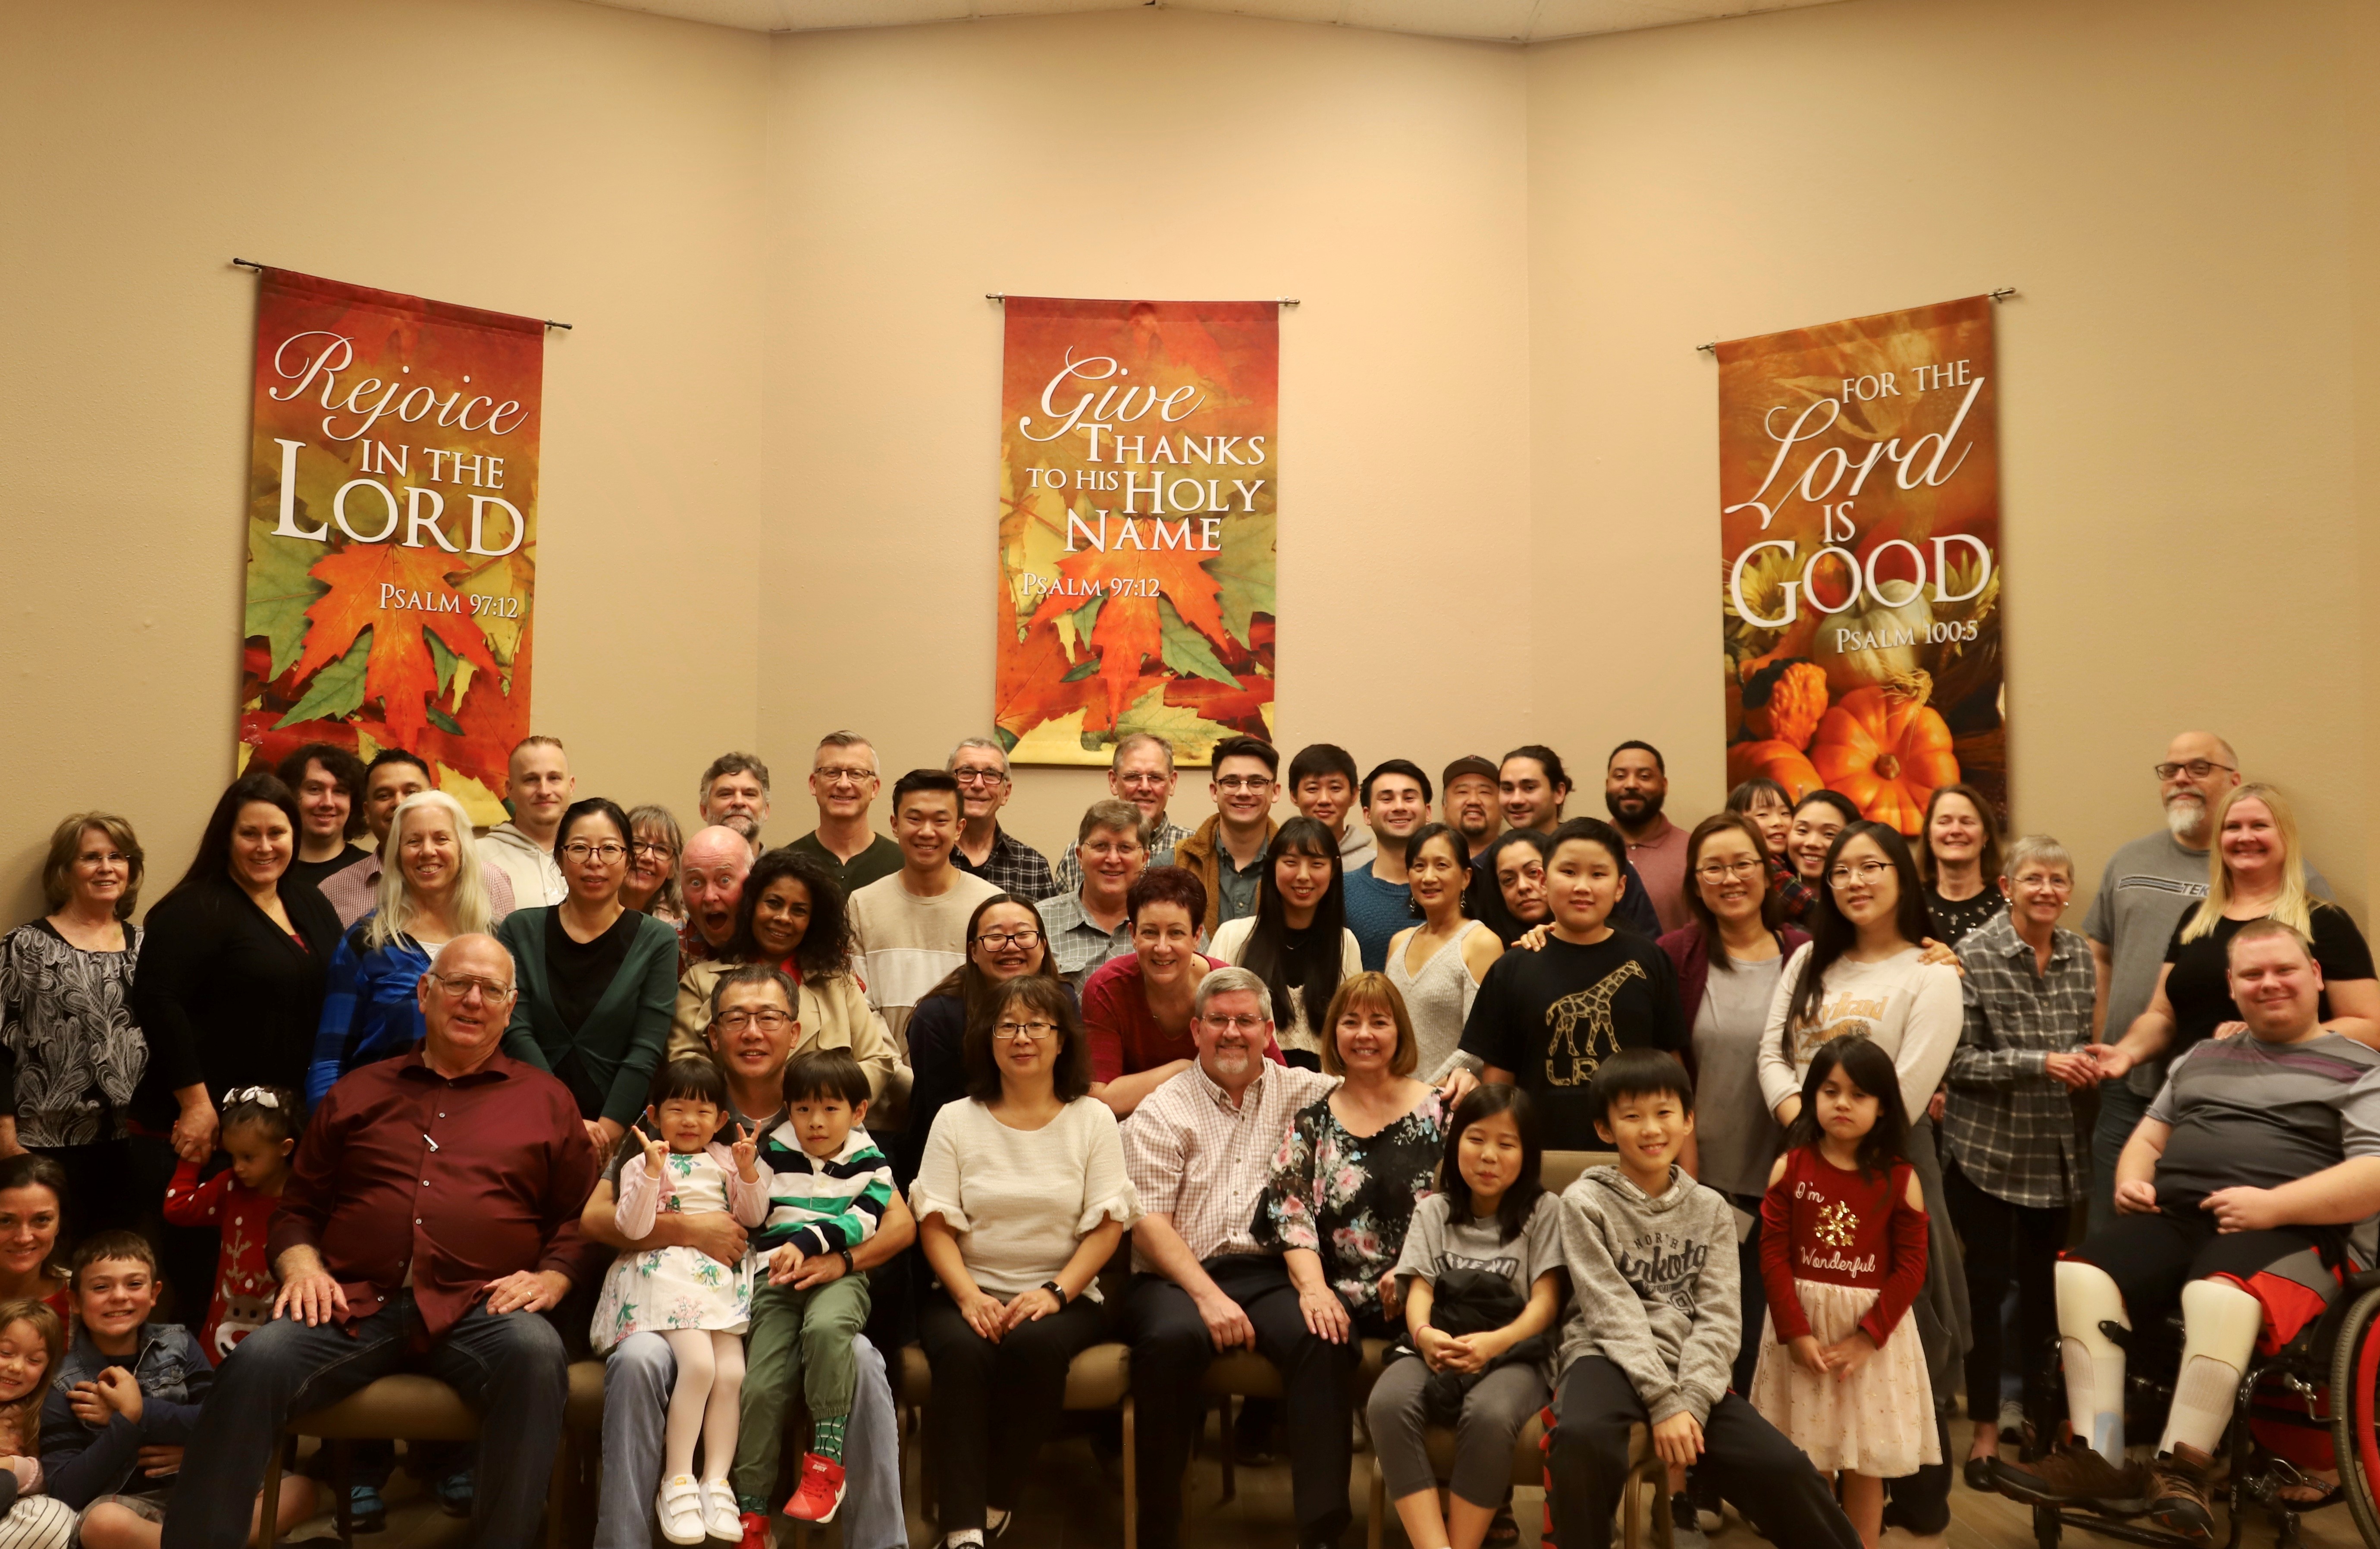 img/church_photos/BCC_Thanksgiving_2019/thanksgiving2019.jpg